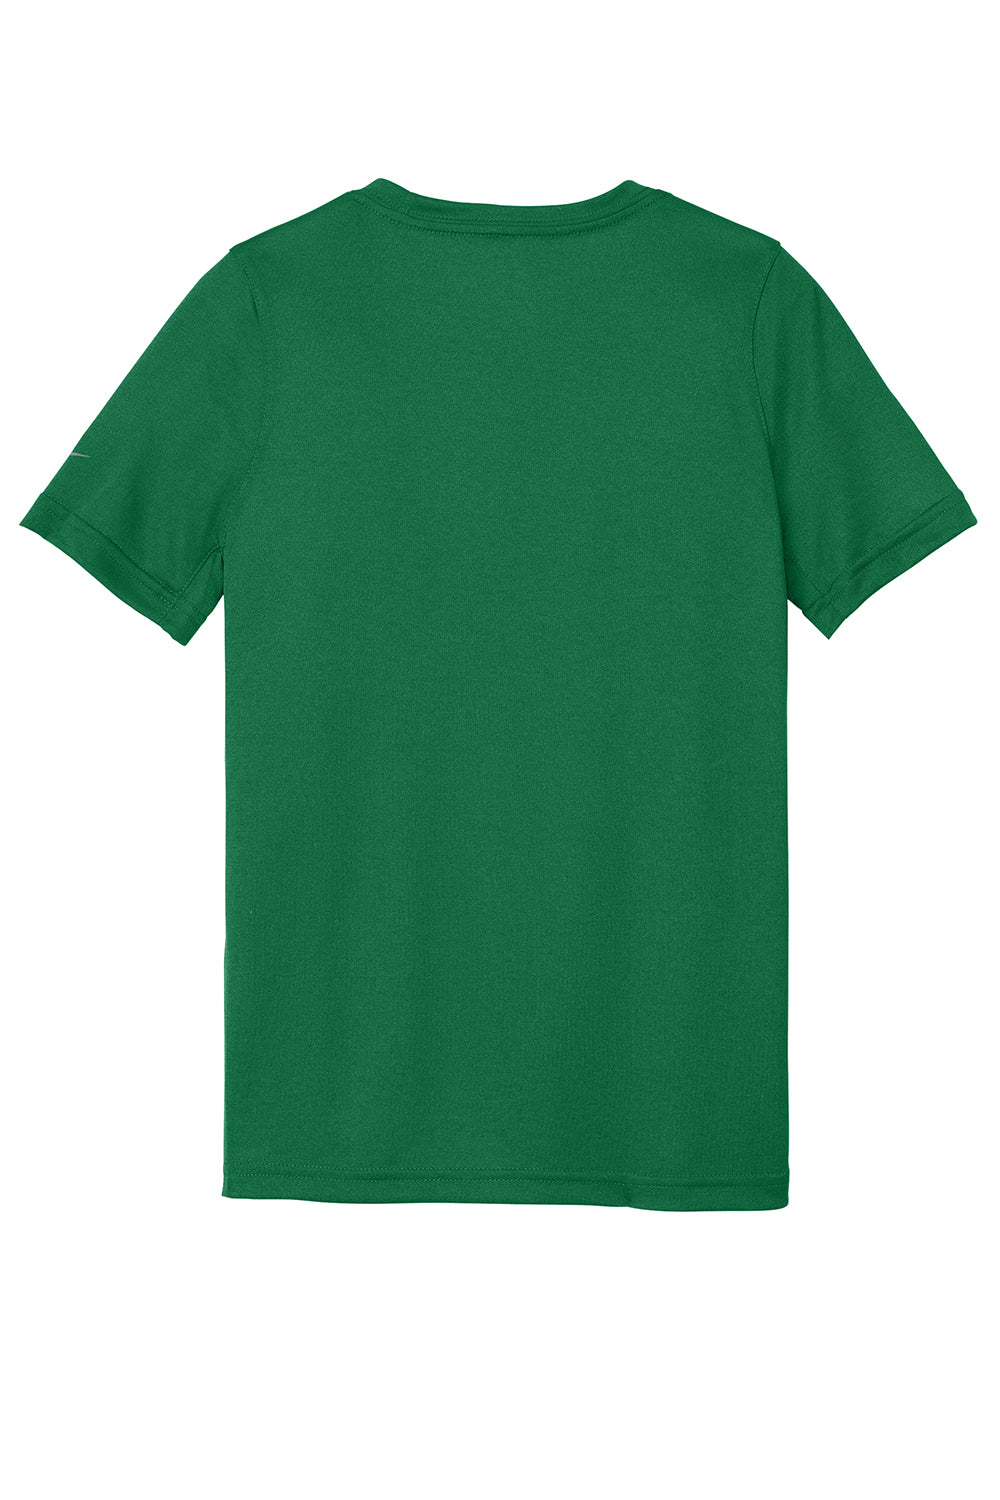 Nike NKDX8787 Youth rLegend Dri-Fit Moisture Wicking Short Sleeve Crewneck T-Shirt Gorge Green Flat Back